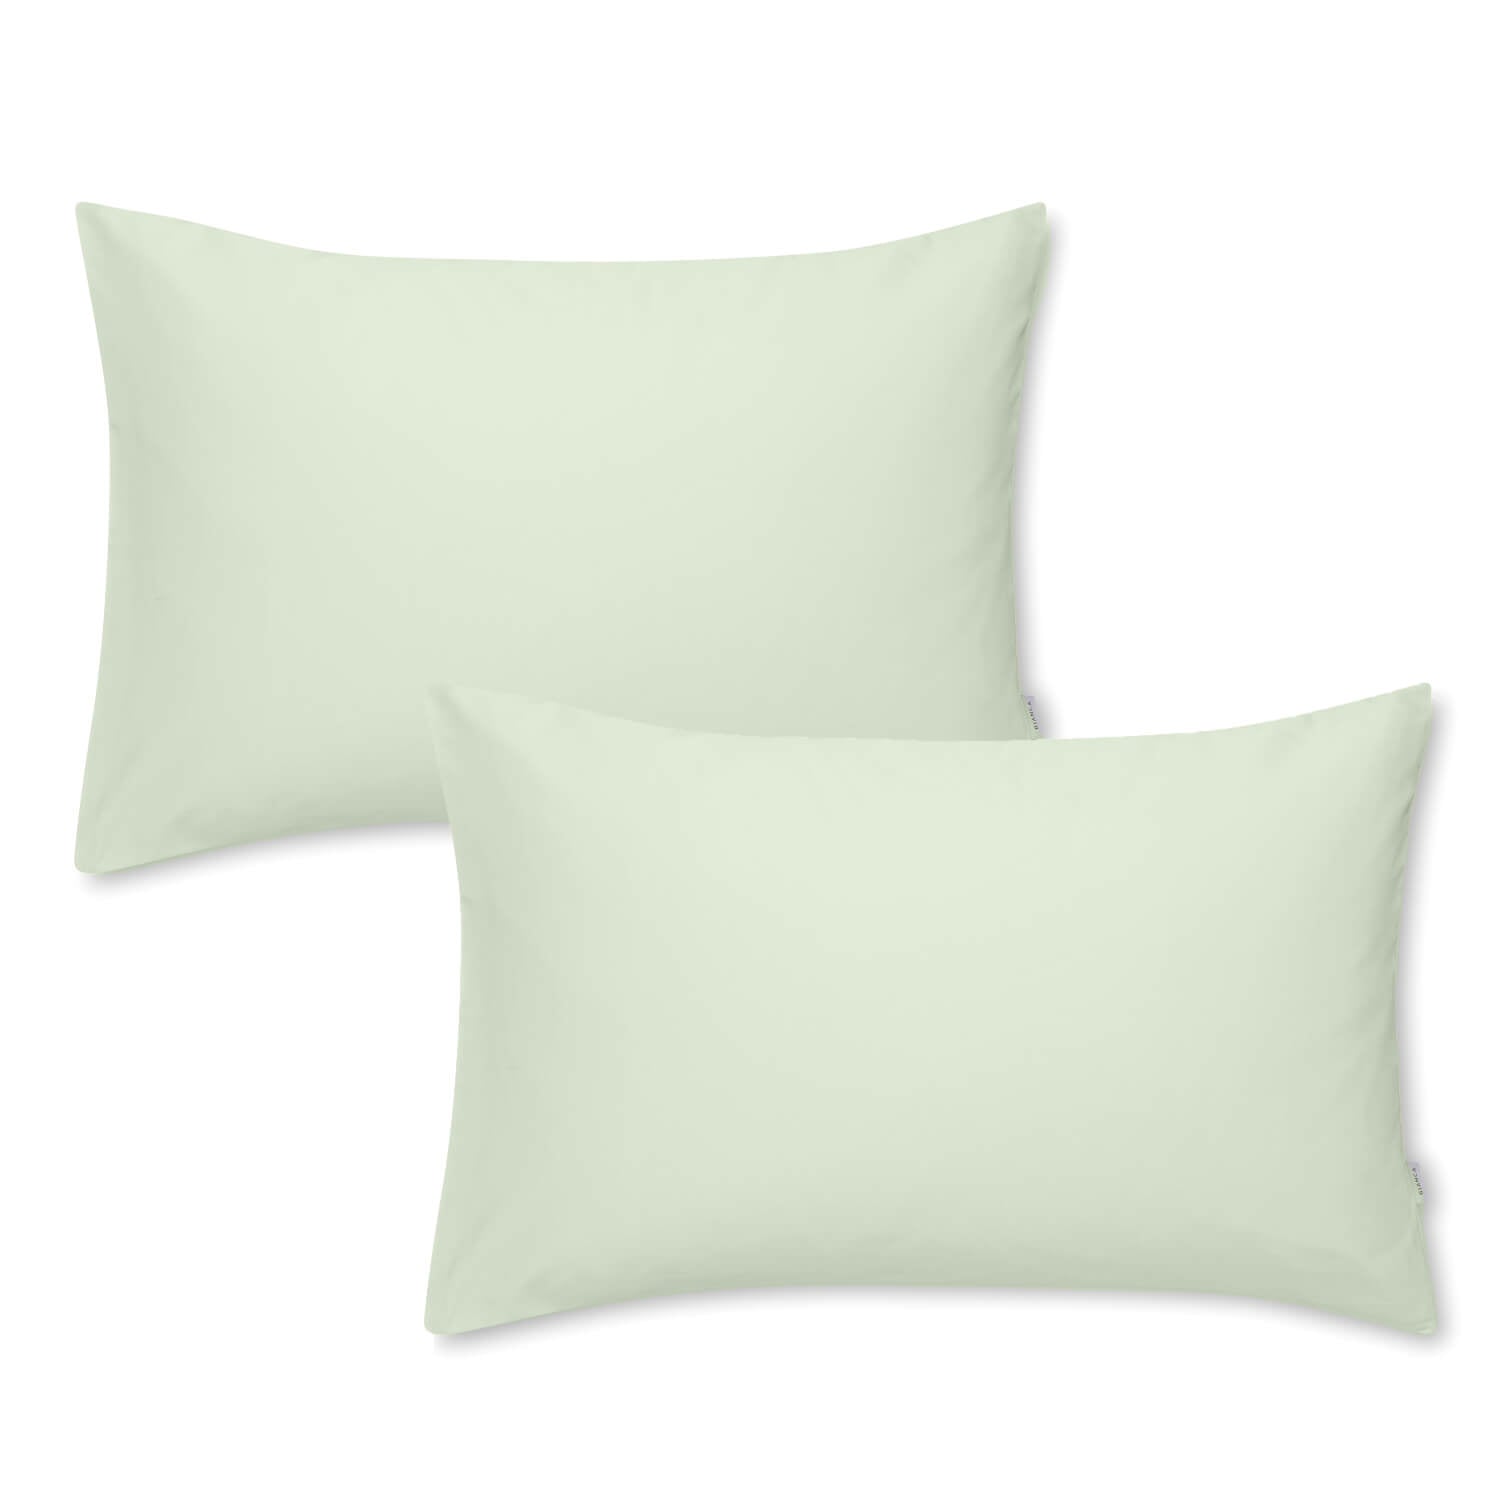 Bianca 400 Thread Count Cotton Sateen Standard Pillowcase Pair - Green 1 Shaws Department Stores